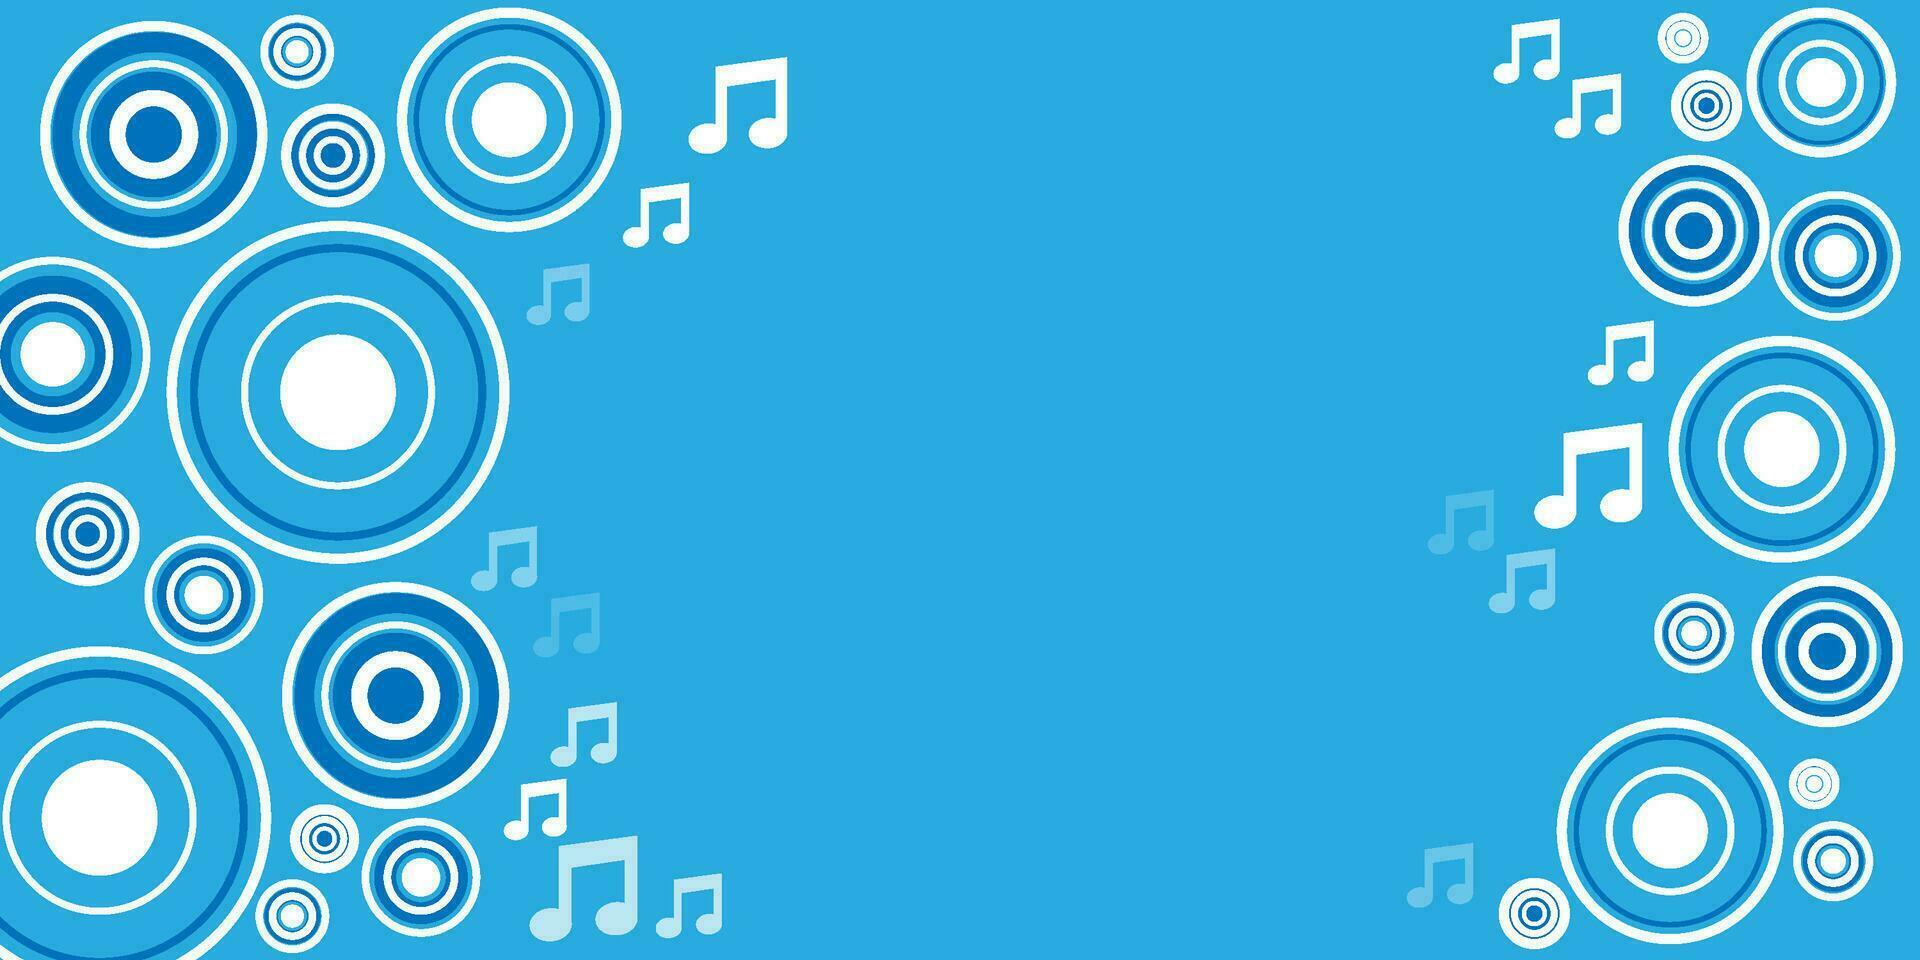 moderno circulo sonido ola igualada fondo.audio tecnología, musical legumbres. vector ilustración en azul antecedentes - eps 10